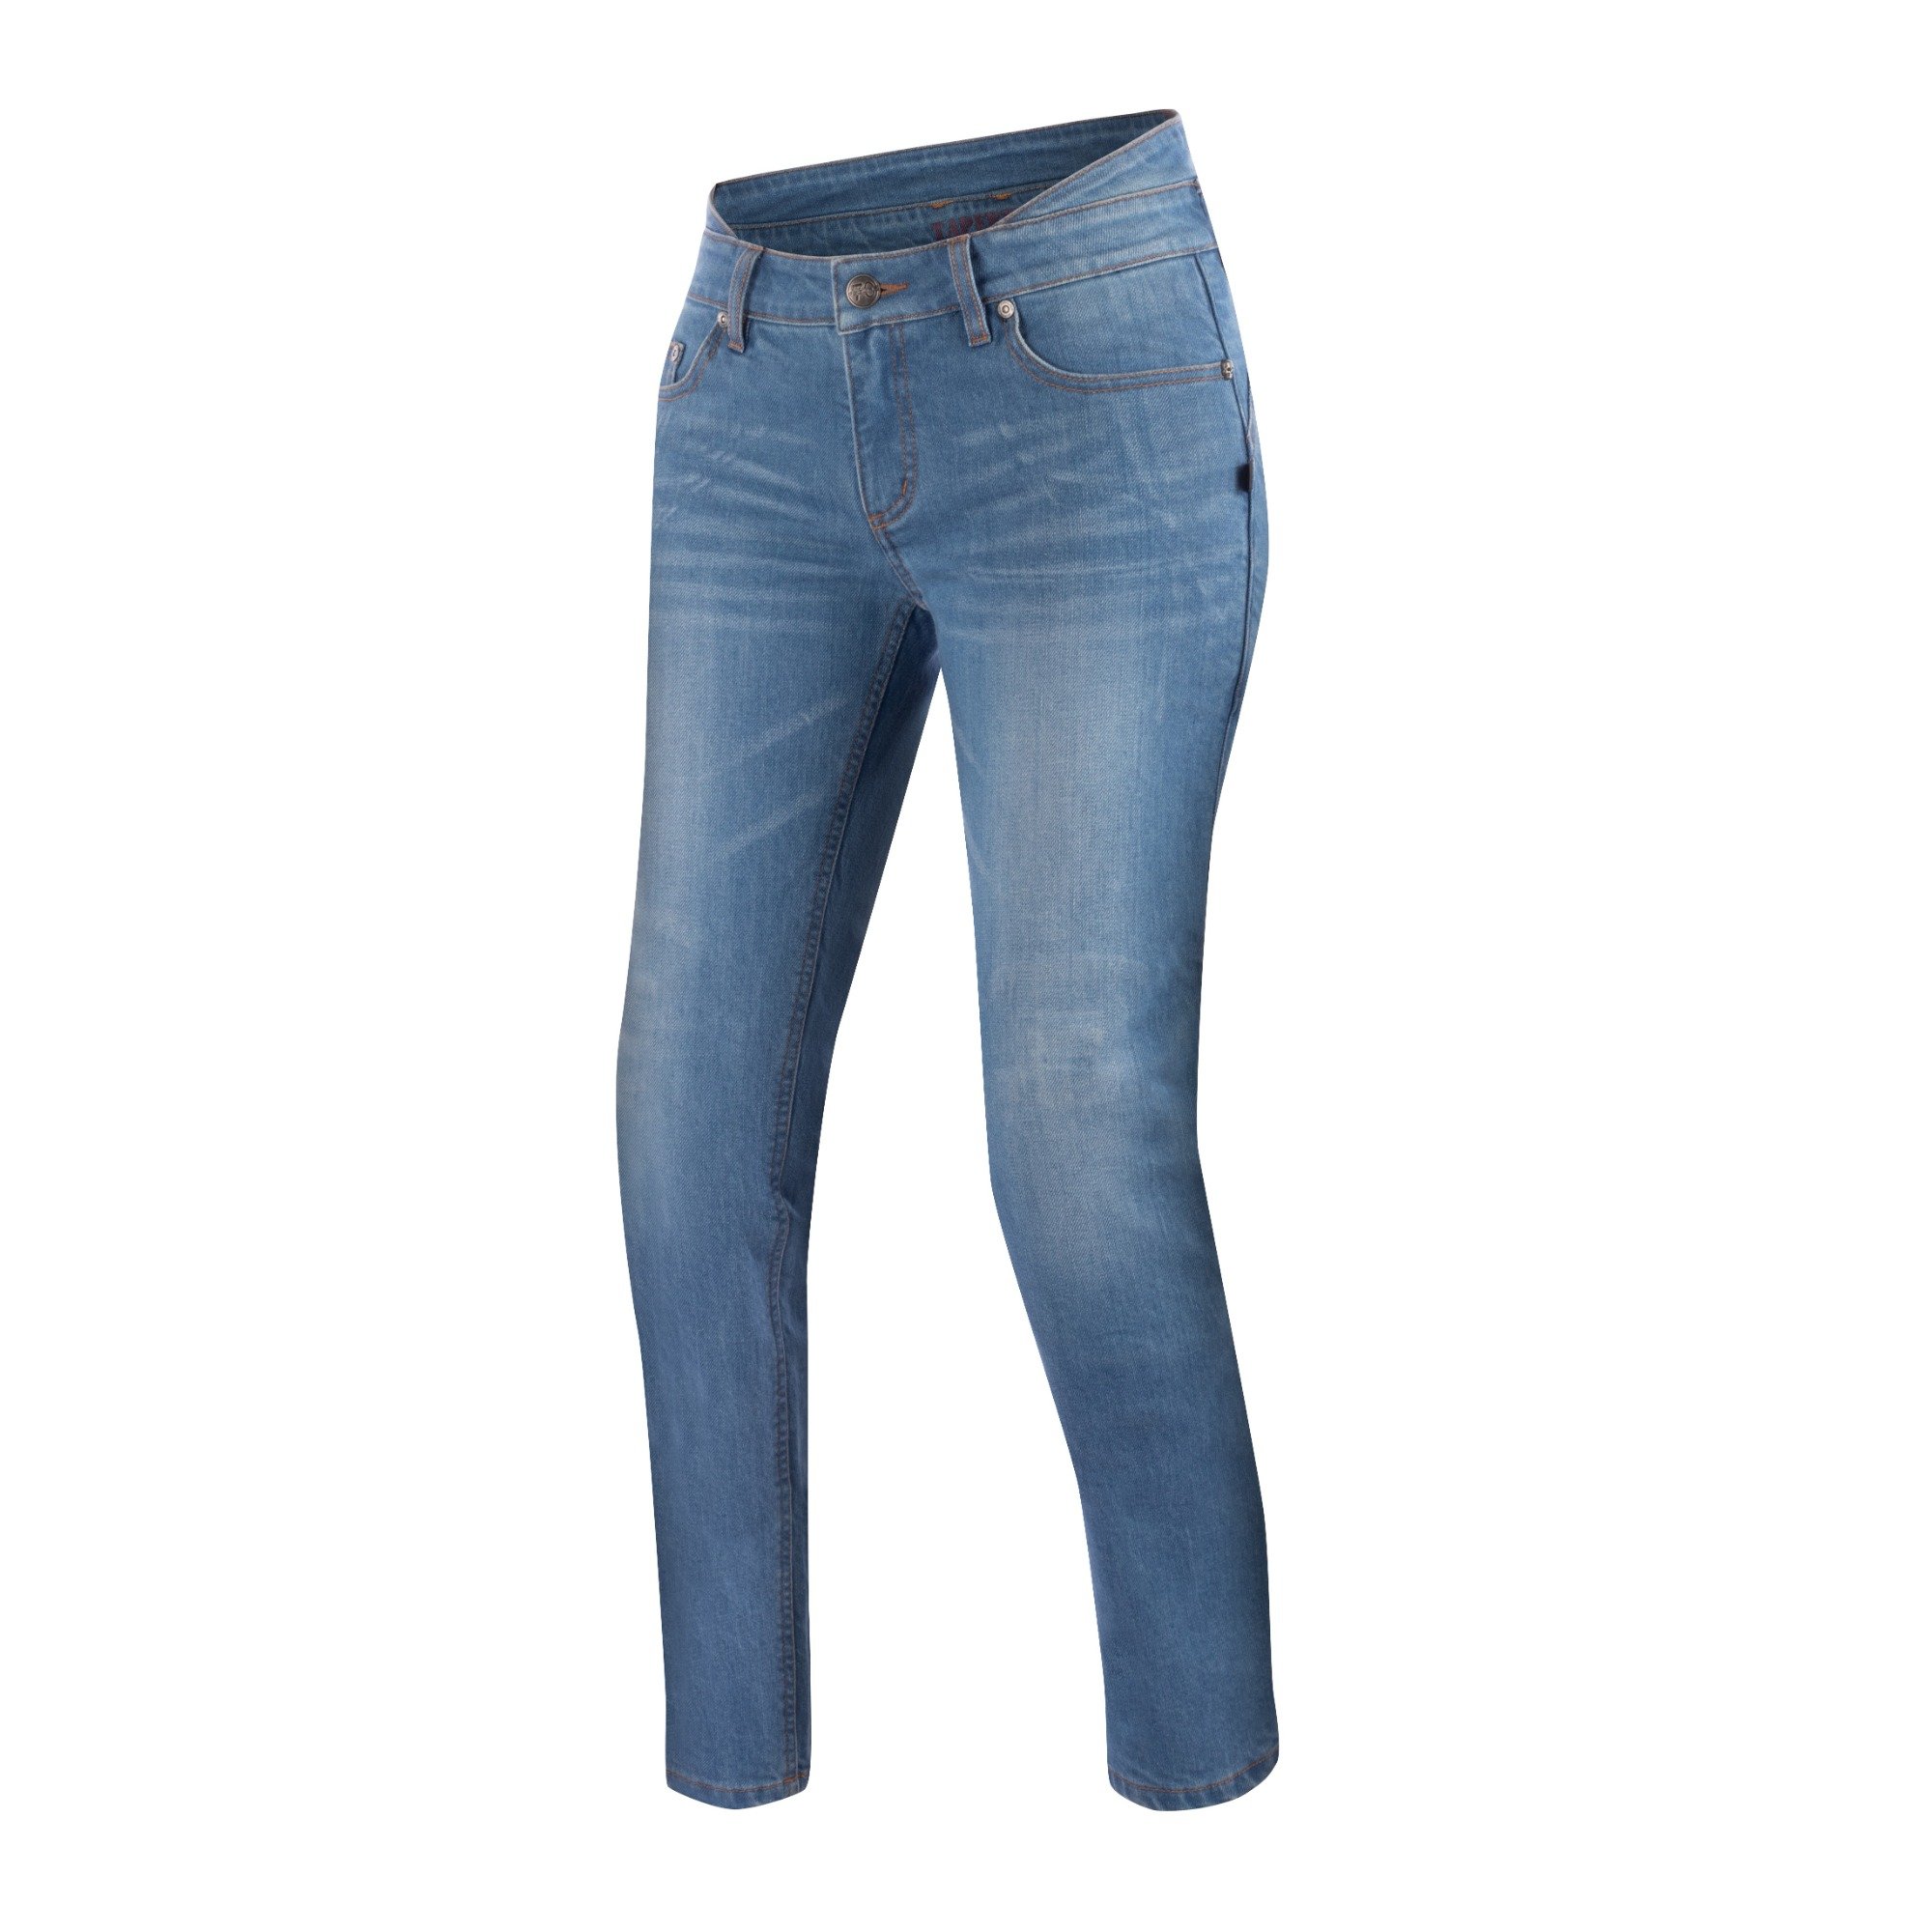 Image of Segura Trousers Lady Rosco Blue Size T5 ID 3660815168172